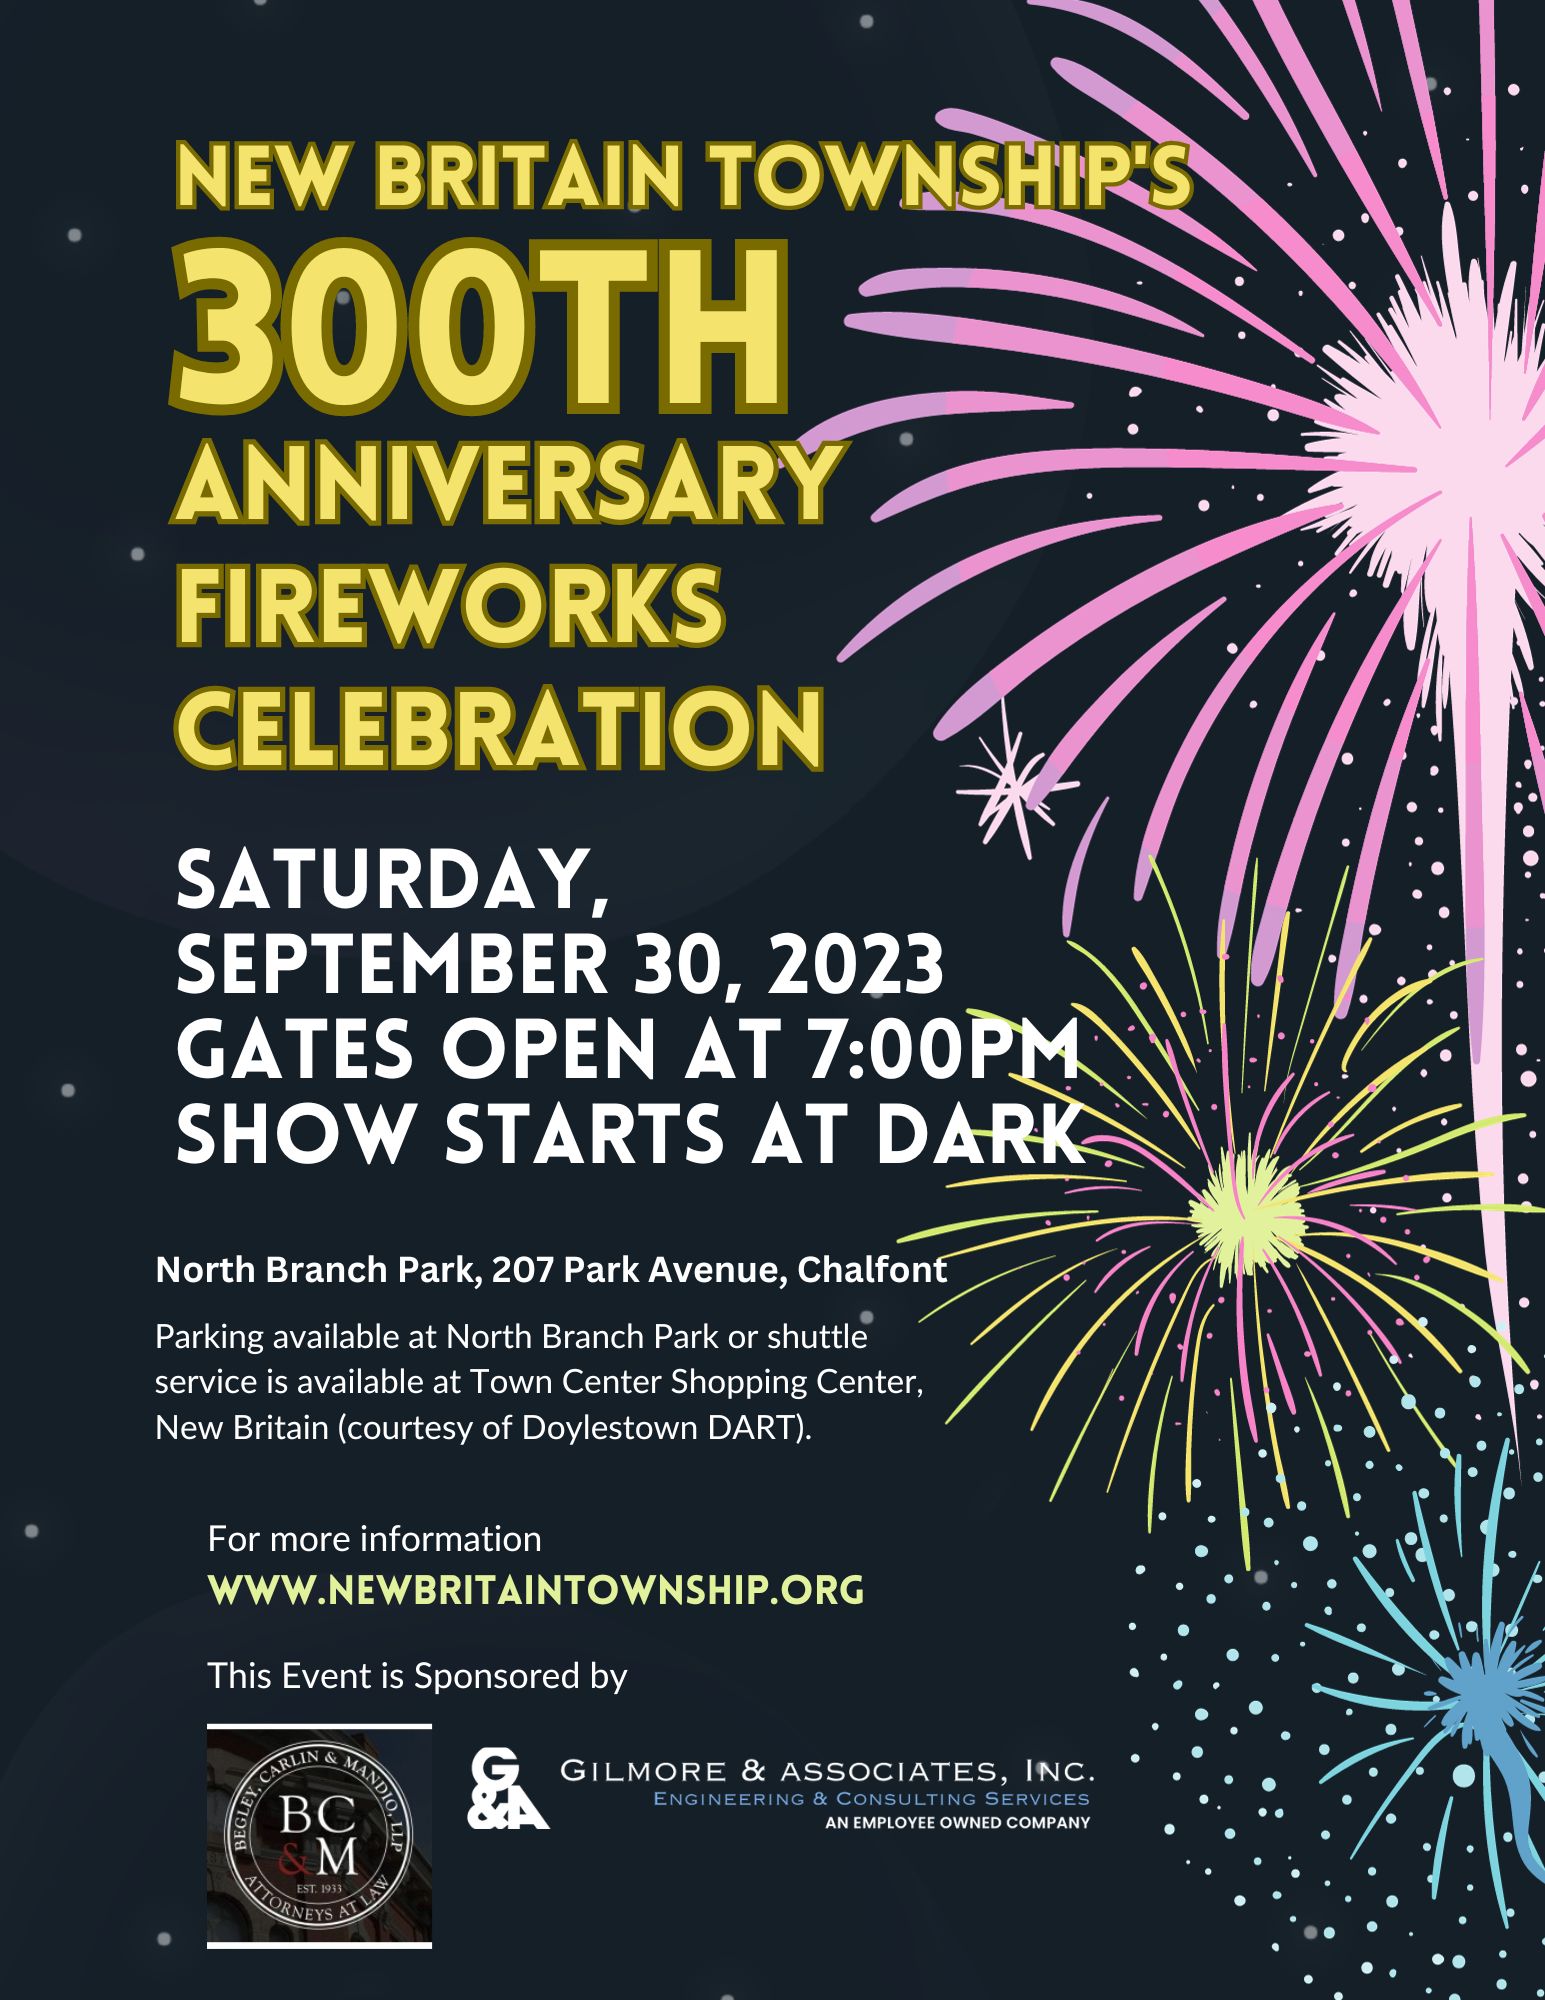 300th Anniversary Fireworks Celebration – Saturday, September 30, 2023